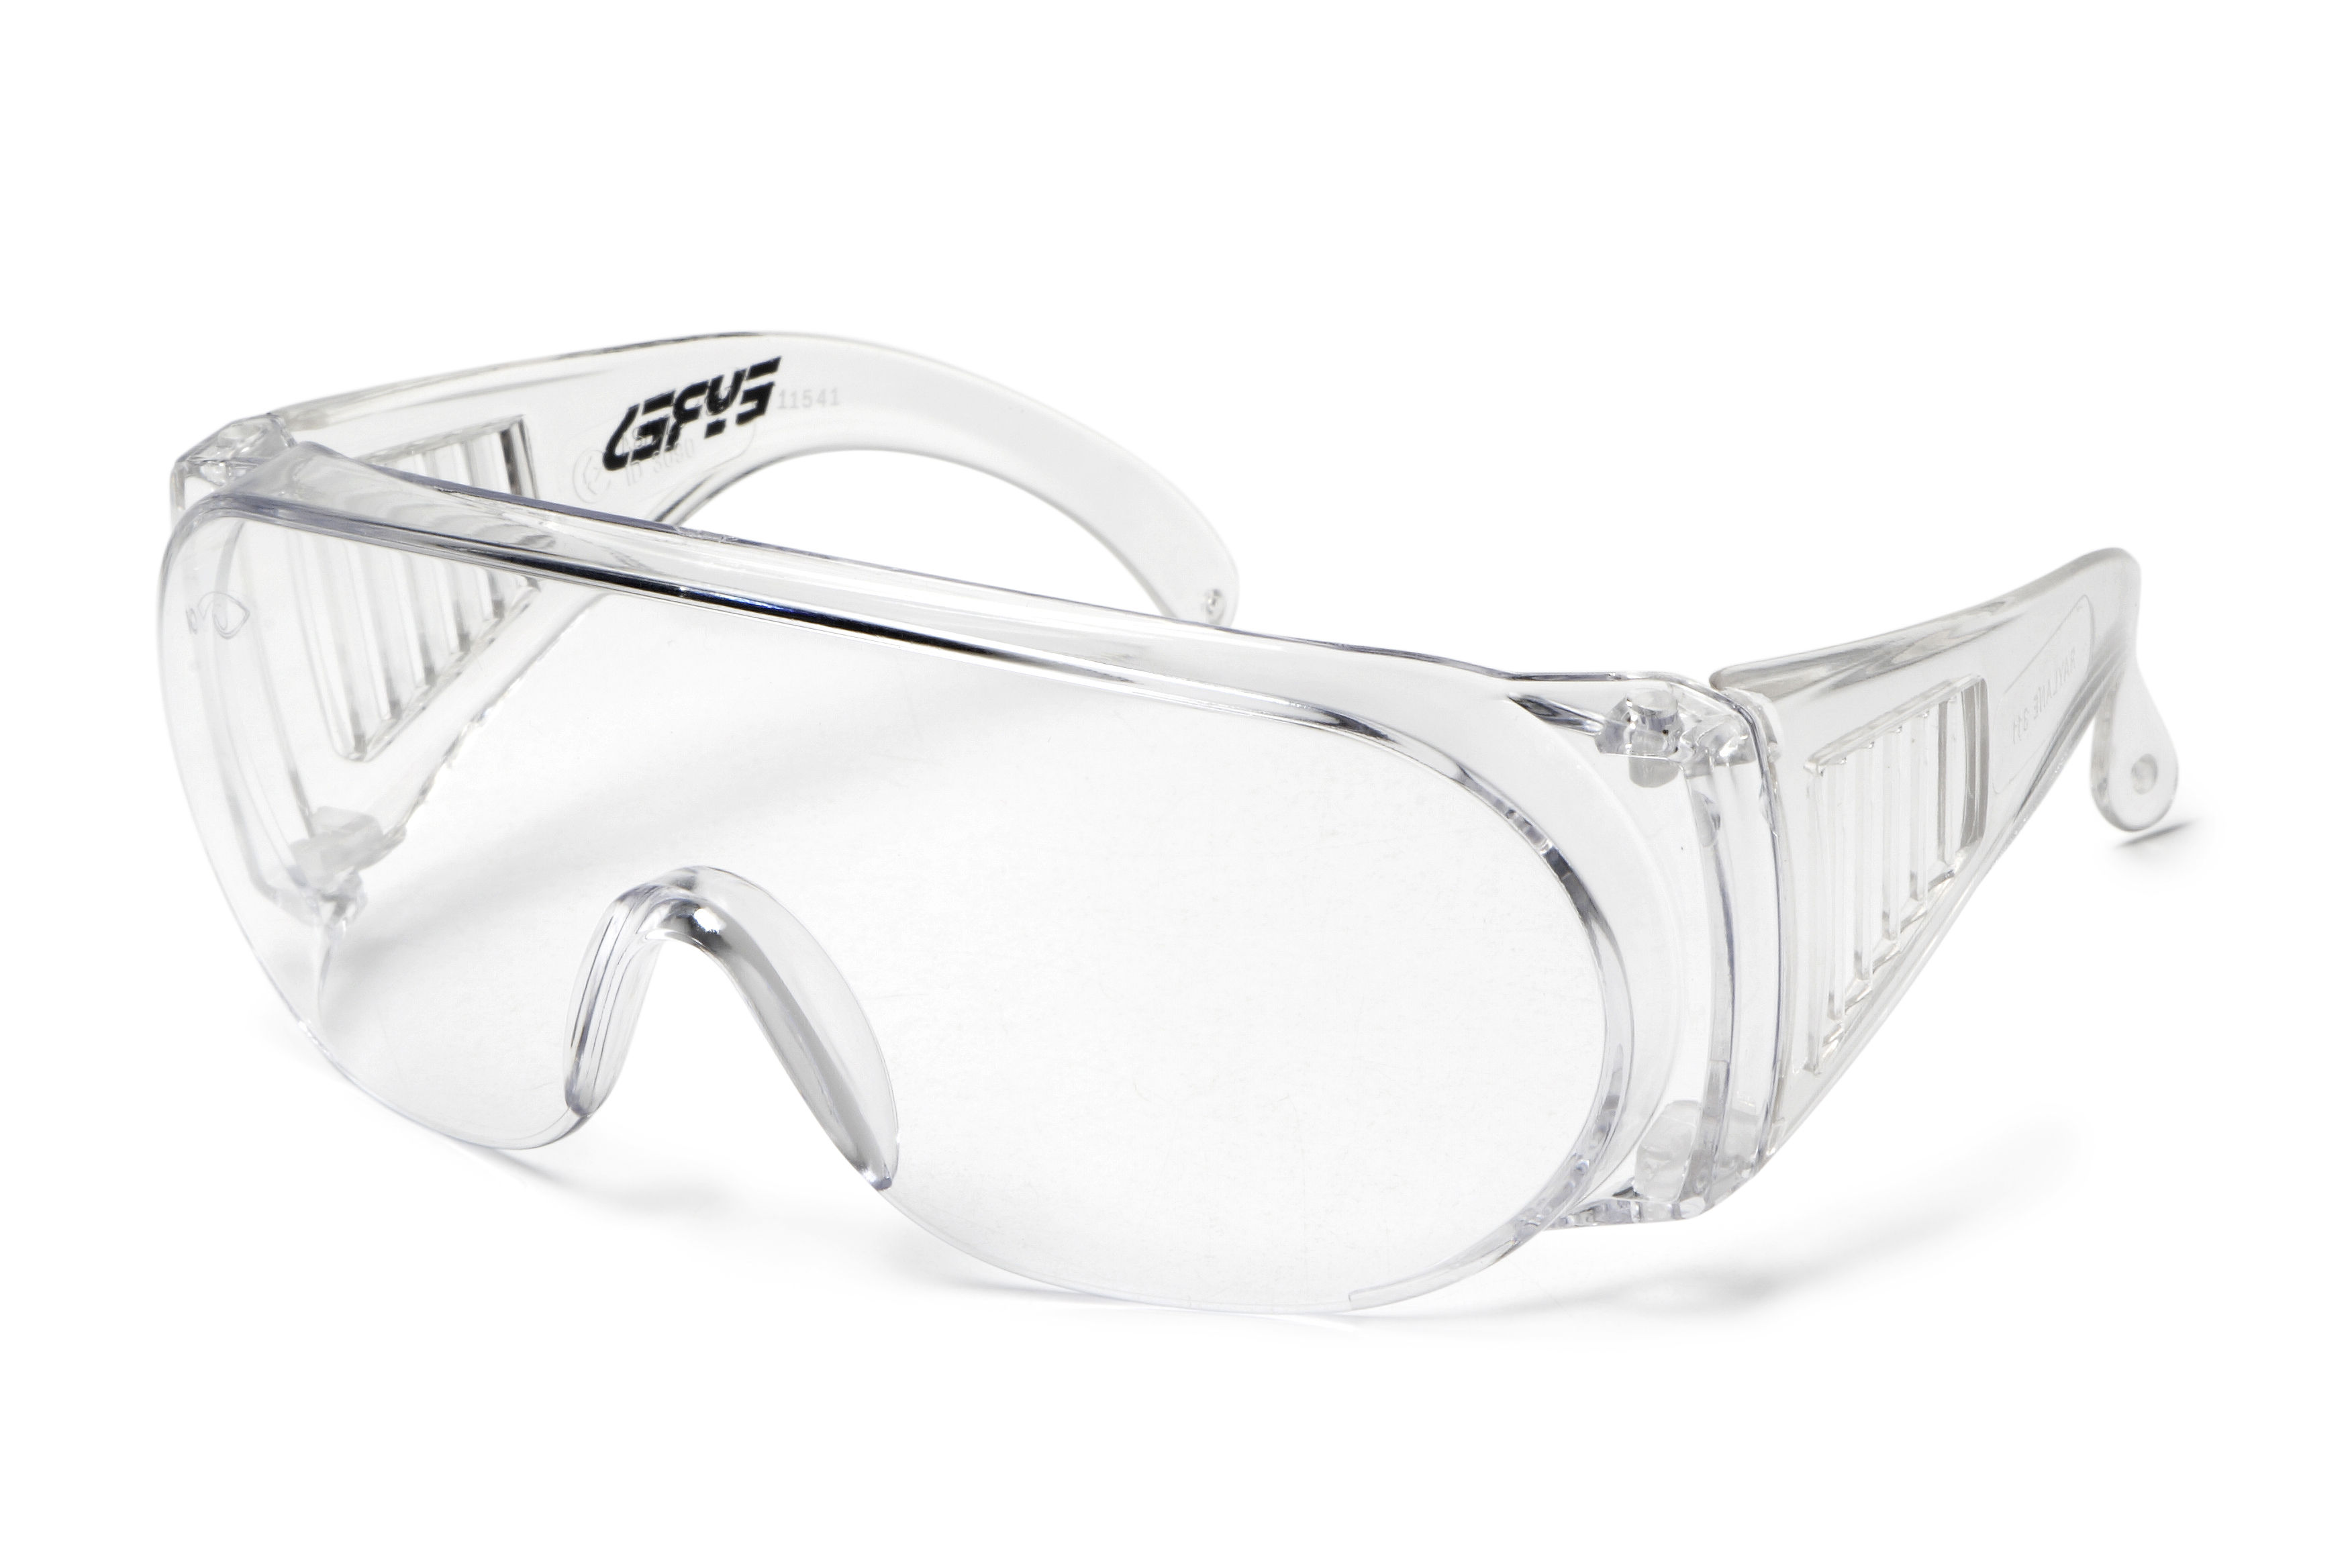 Eyres XCCESS Shiny Black Smoke Safety Glasses Sunglasses